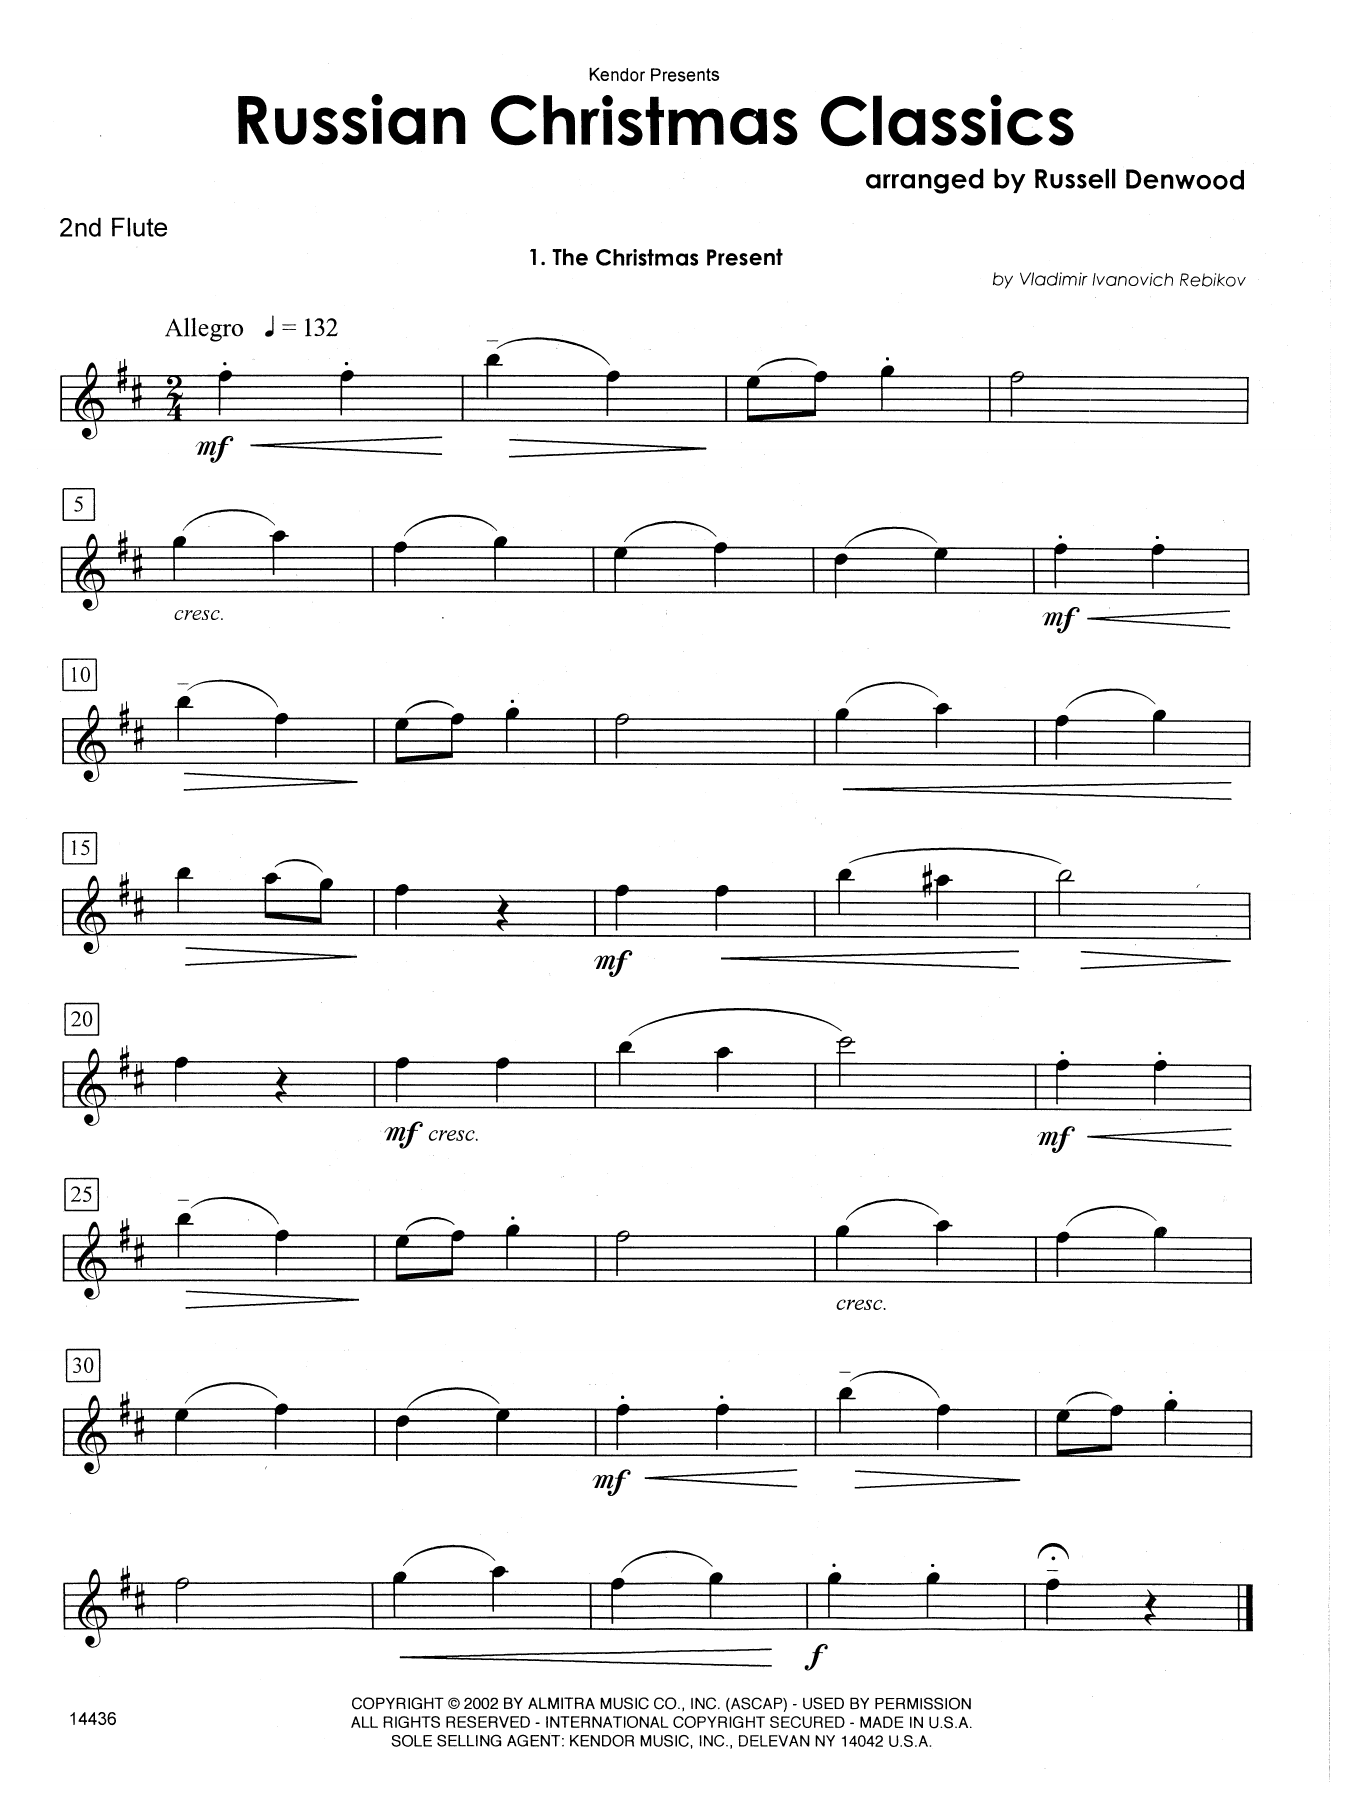 Download Russell Denwood Russian Christmas Classics - 2nd Flute Sheet Music